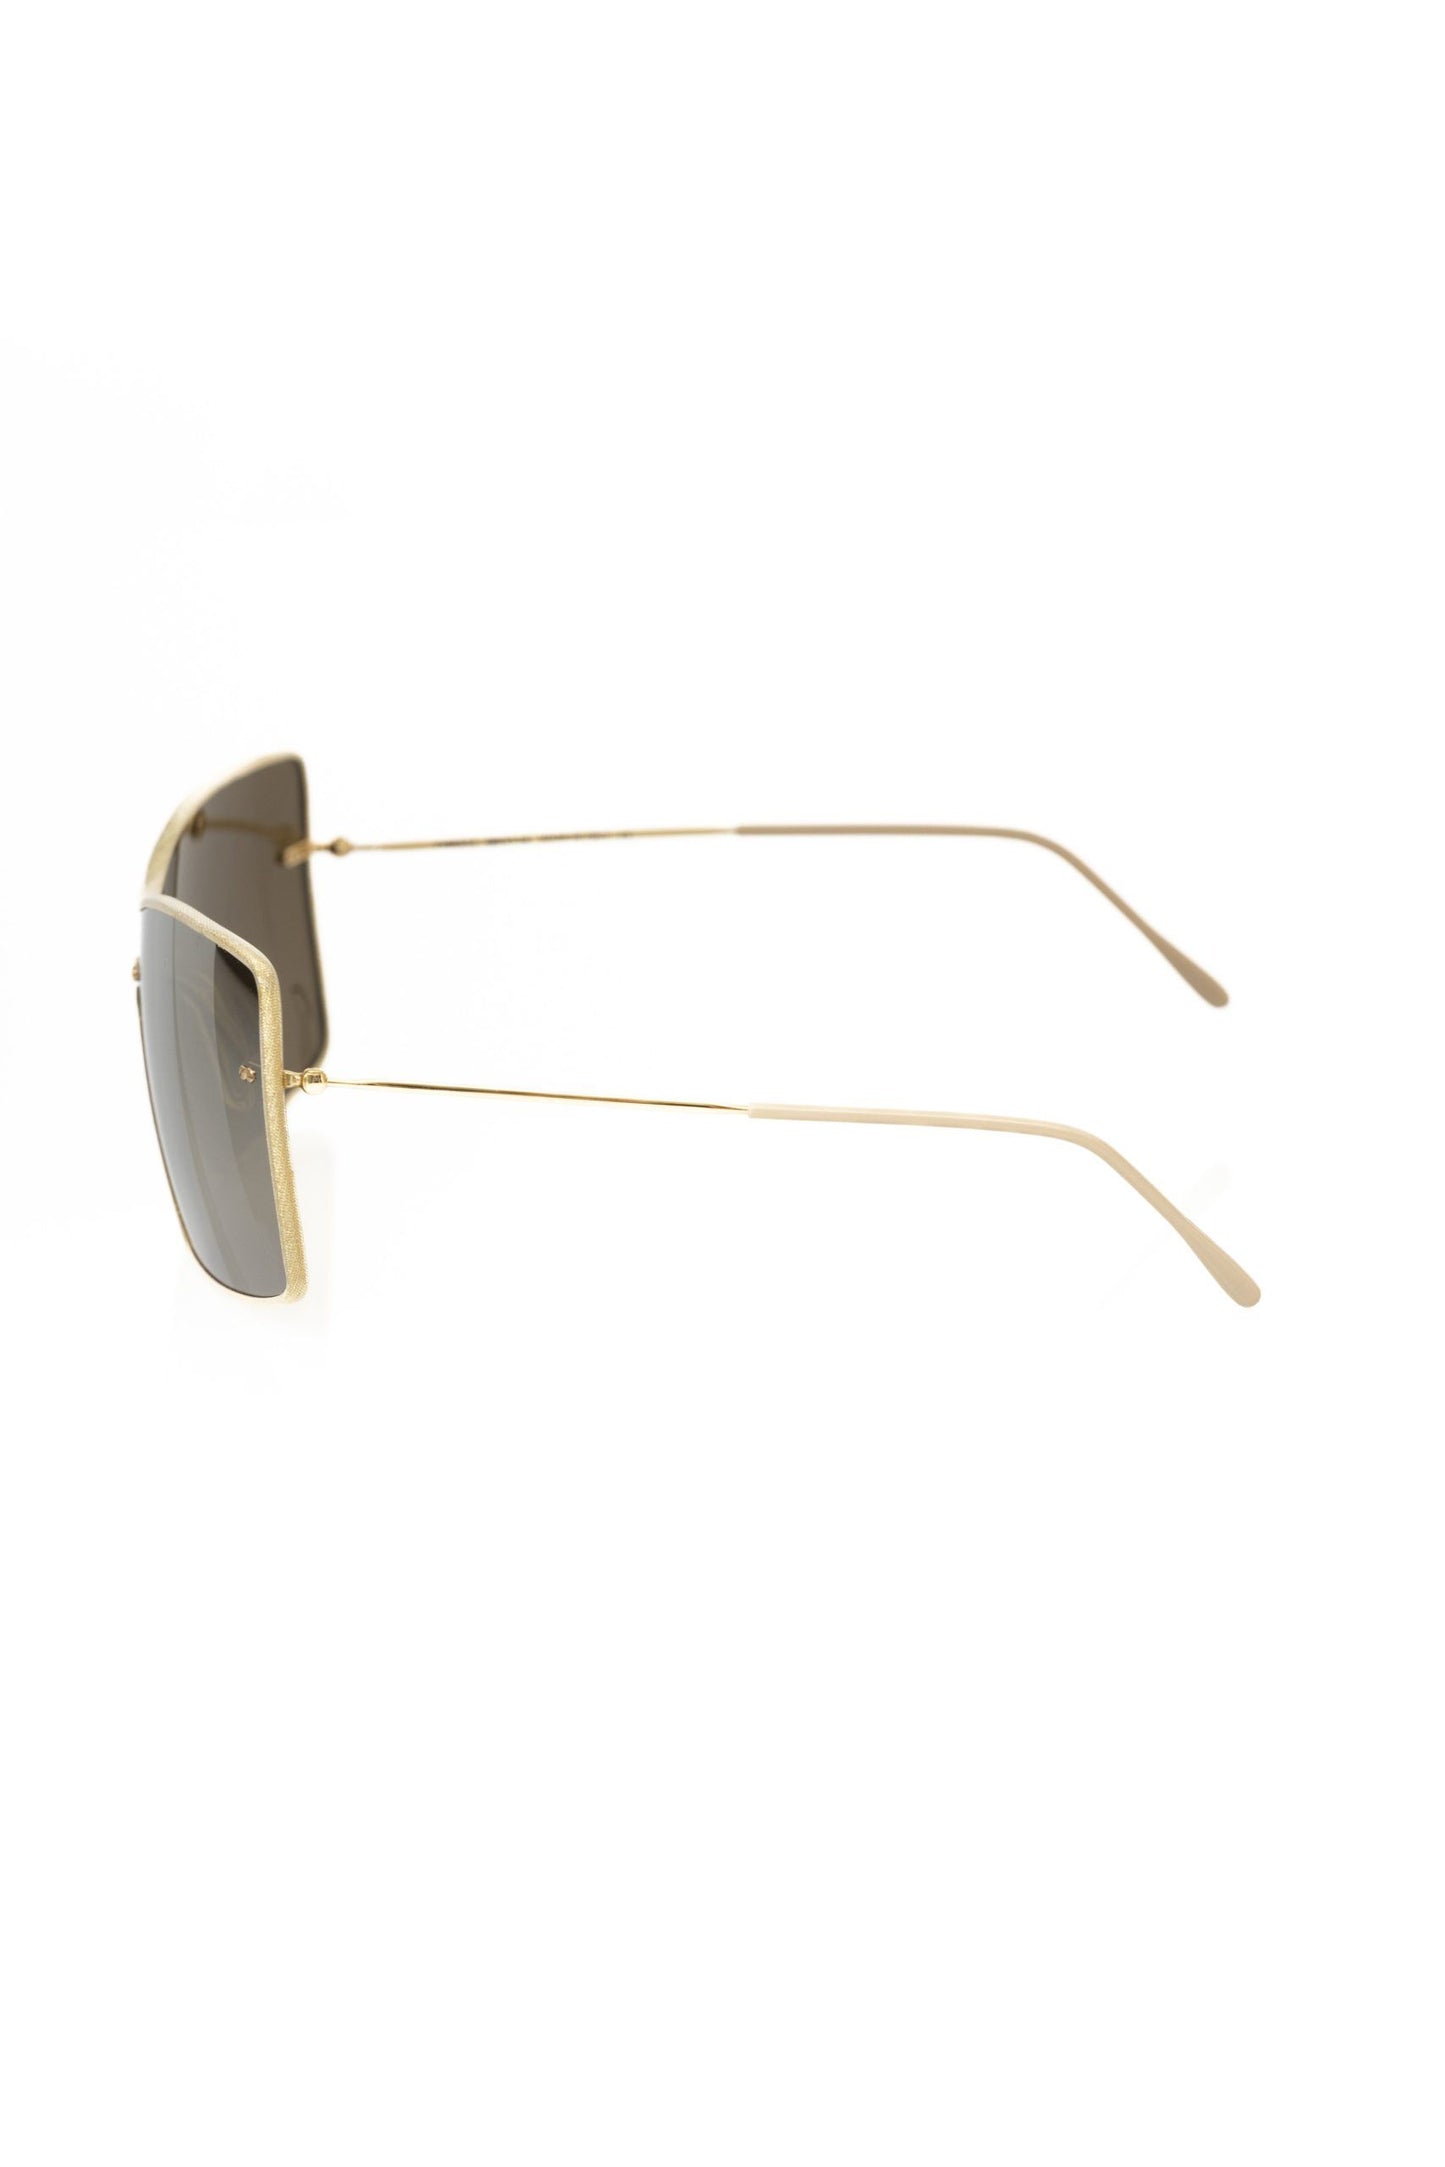 Frankie Morello FRMO-22092 Gold Metallic Fibre Sunglasses